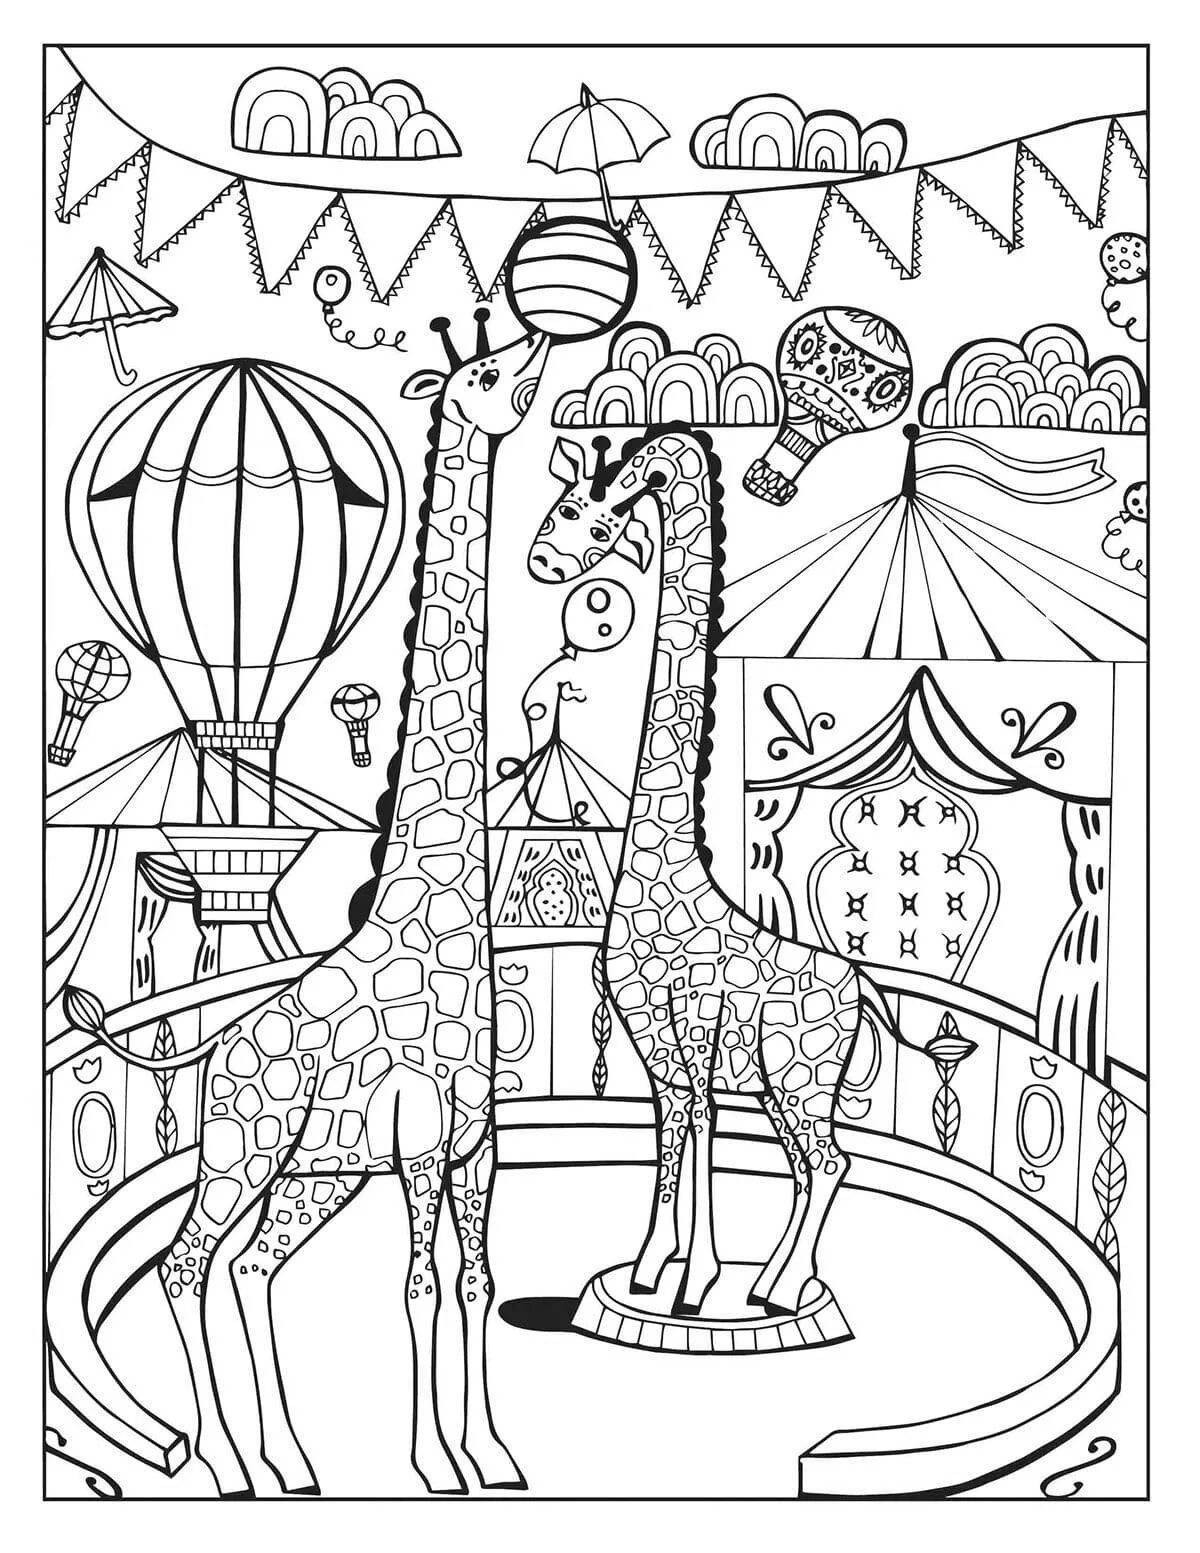 Fascinating circus coloring book for kids